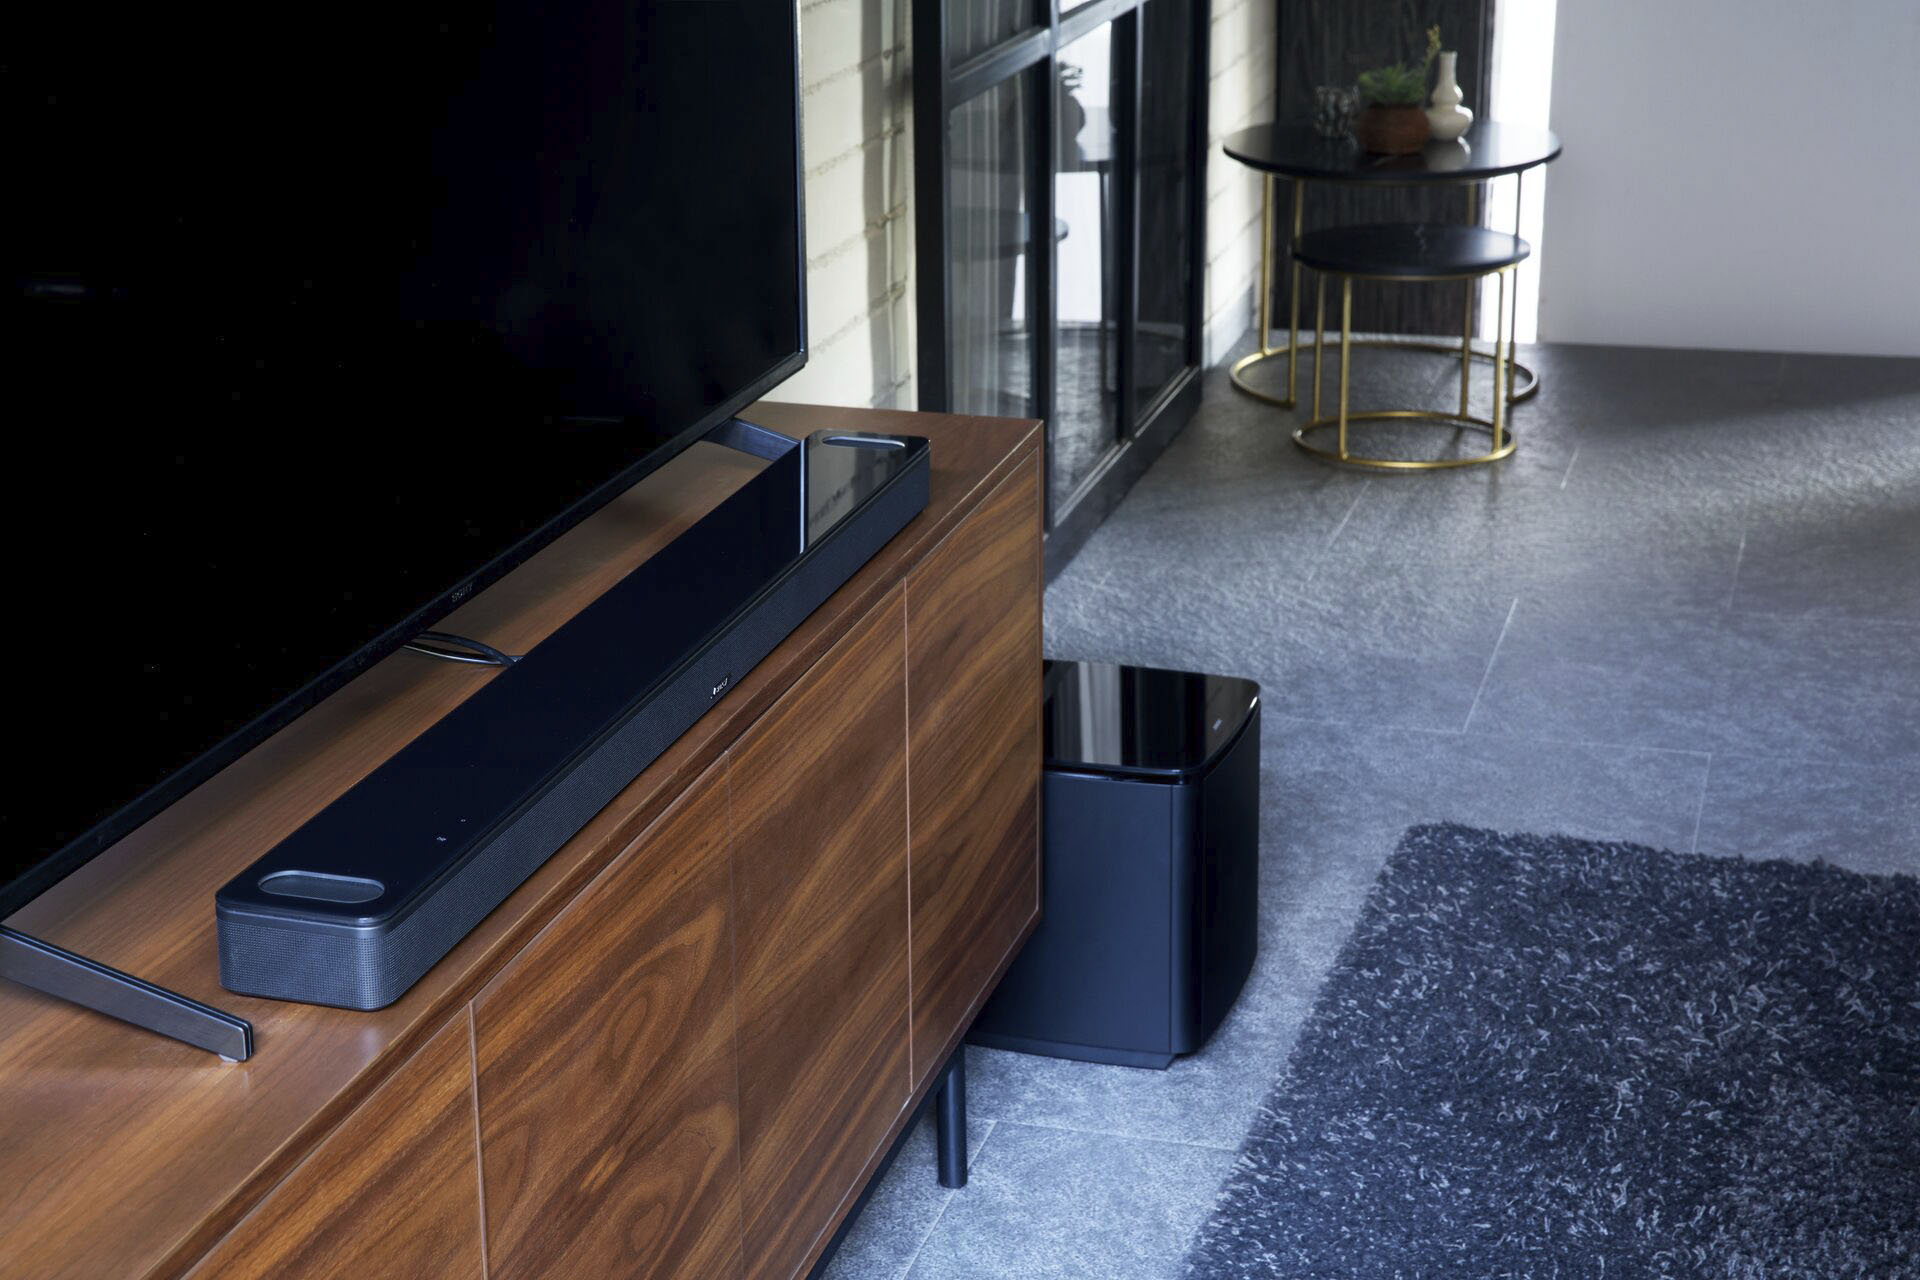 Bose Smart Soundbar 900 Home Theater, Certified Refurbished